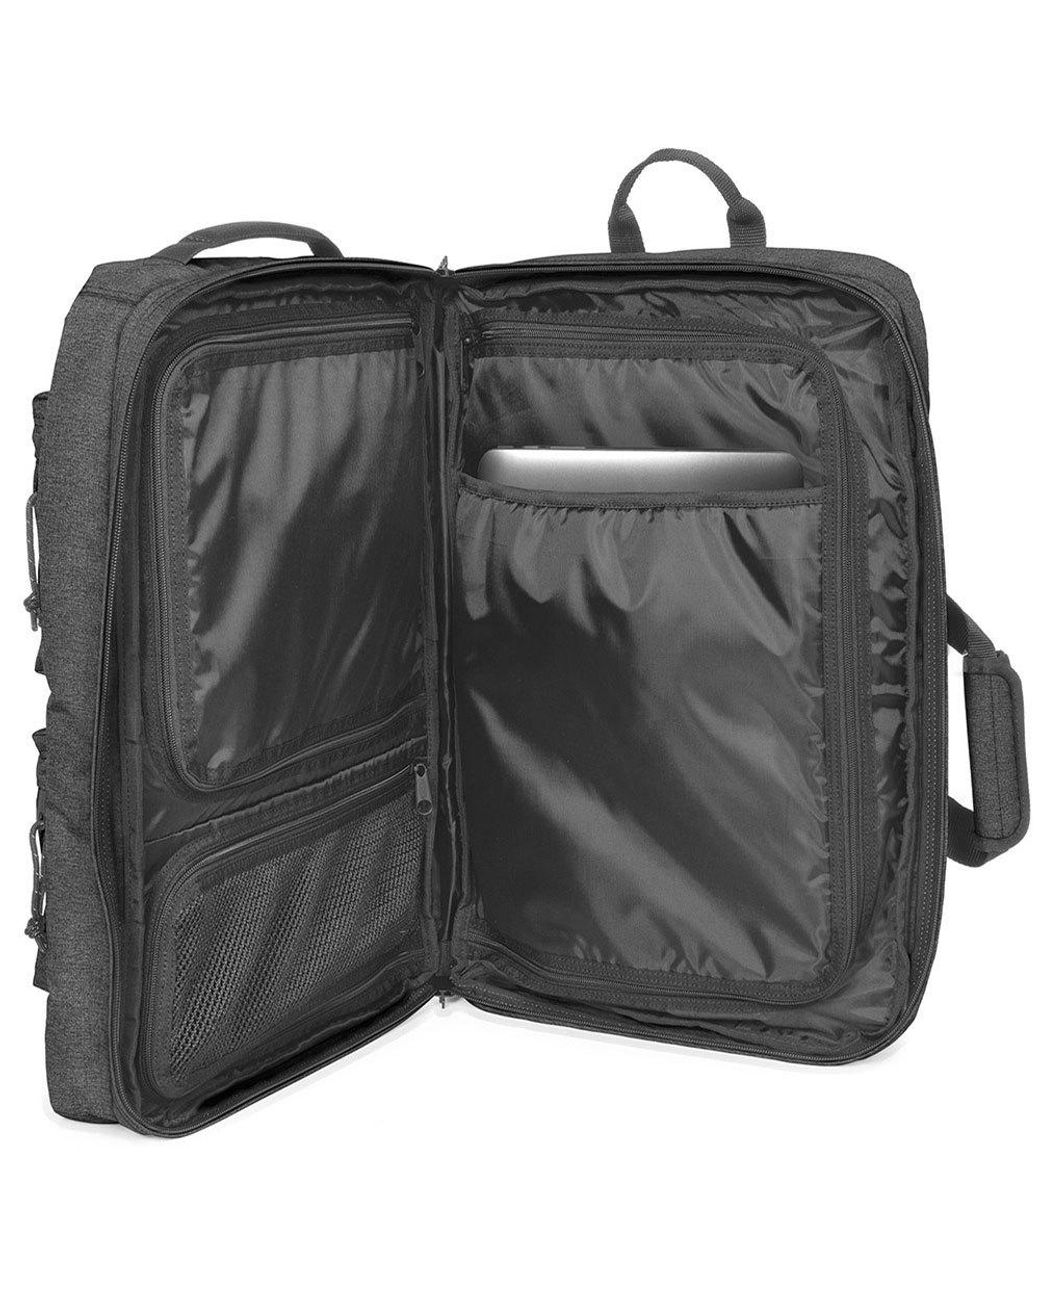 Eastpak Synthetic Tranzpack Double 40l Backpack in Black Denim (Black) |  Lyst